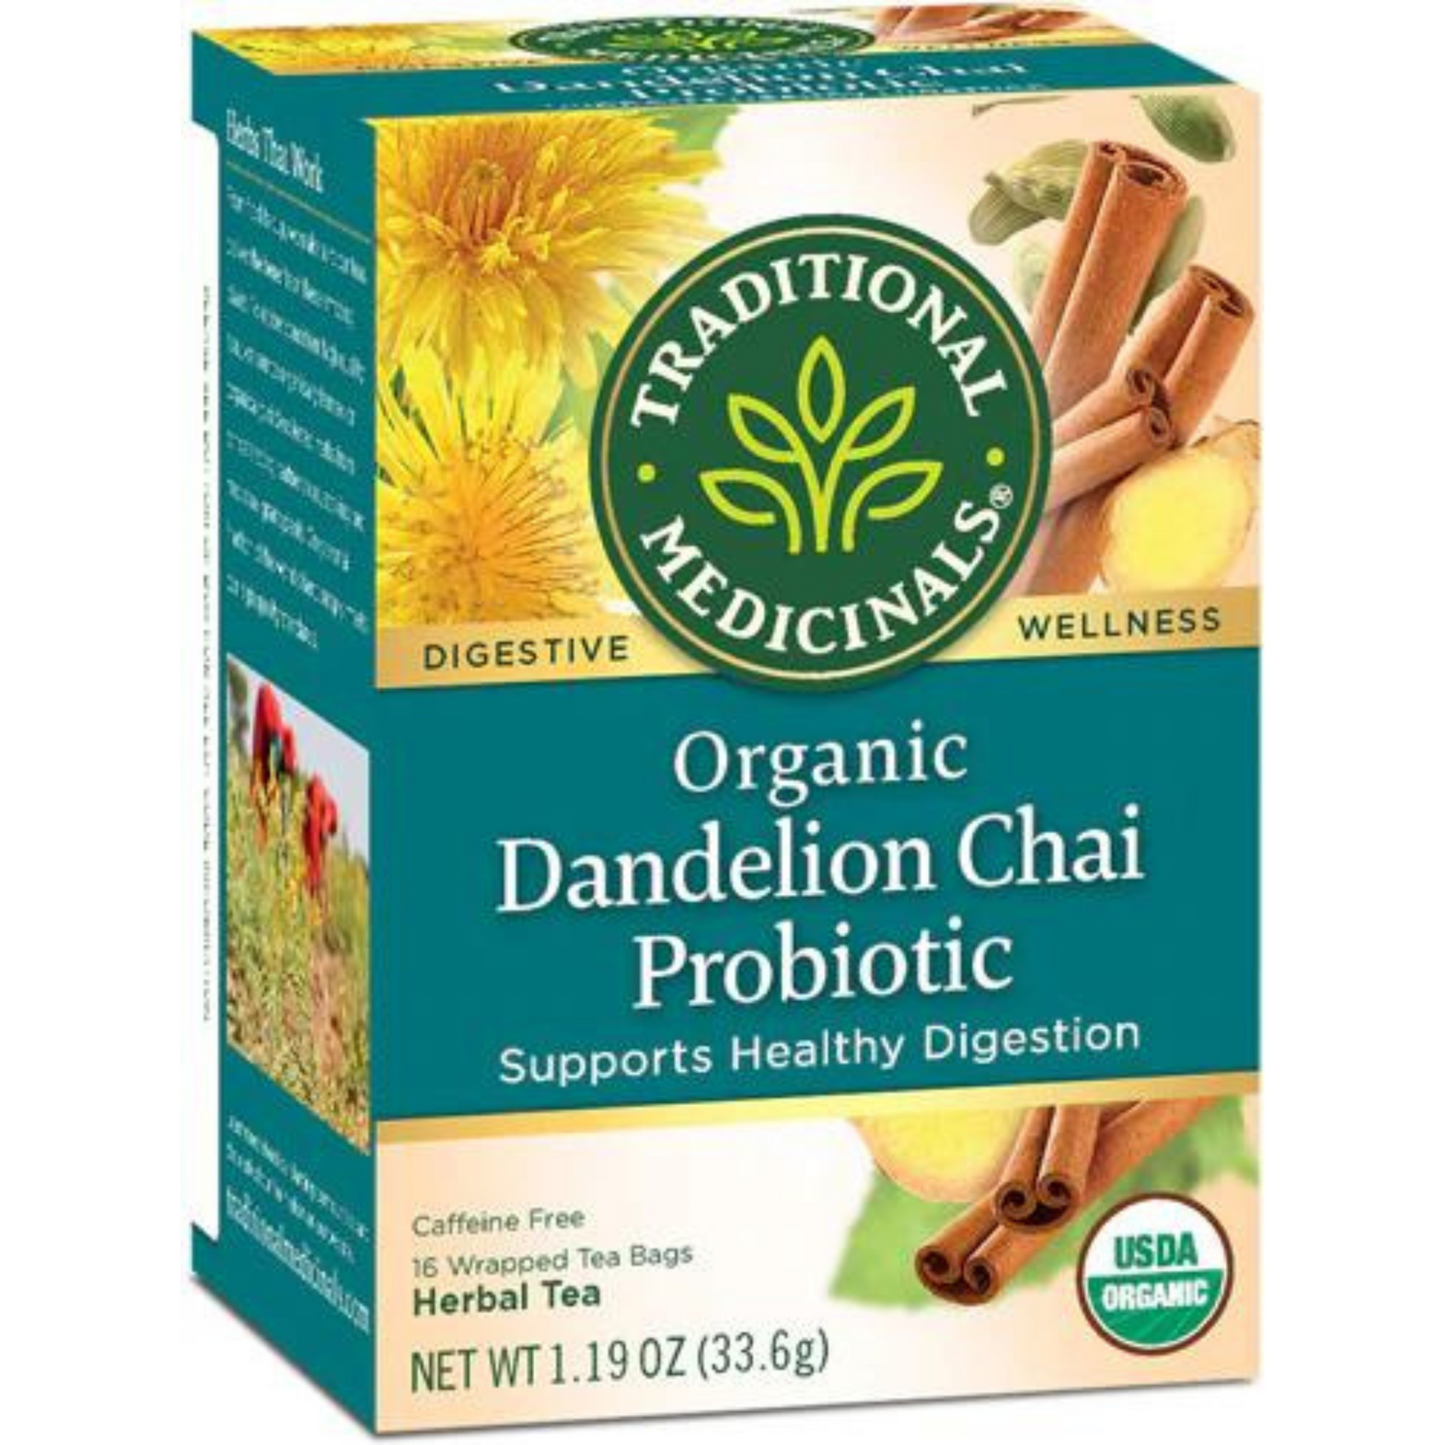 Primary Image of Dandelion Chai Probiotic Tea Bags (16 count)